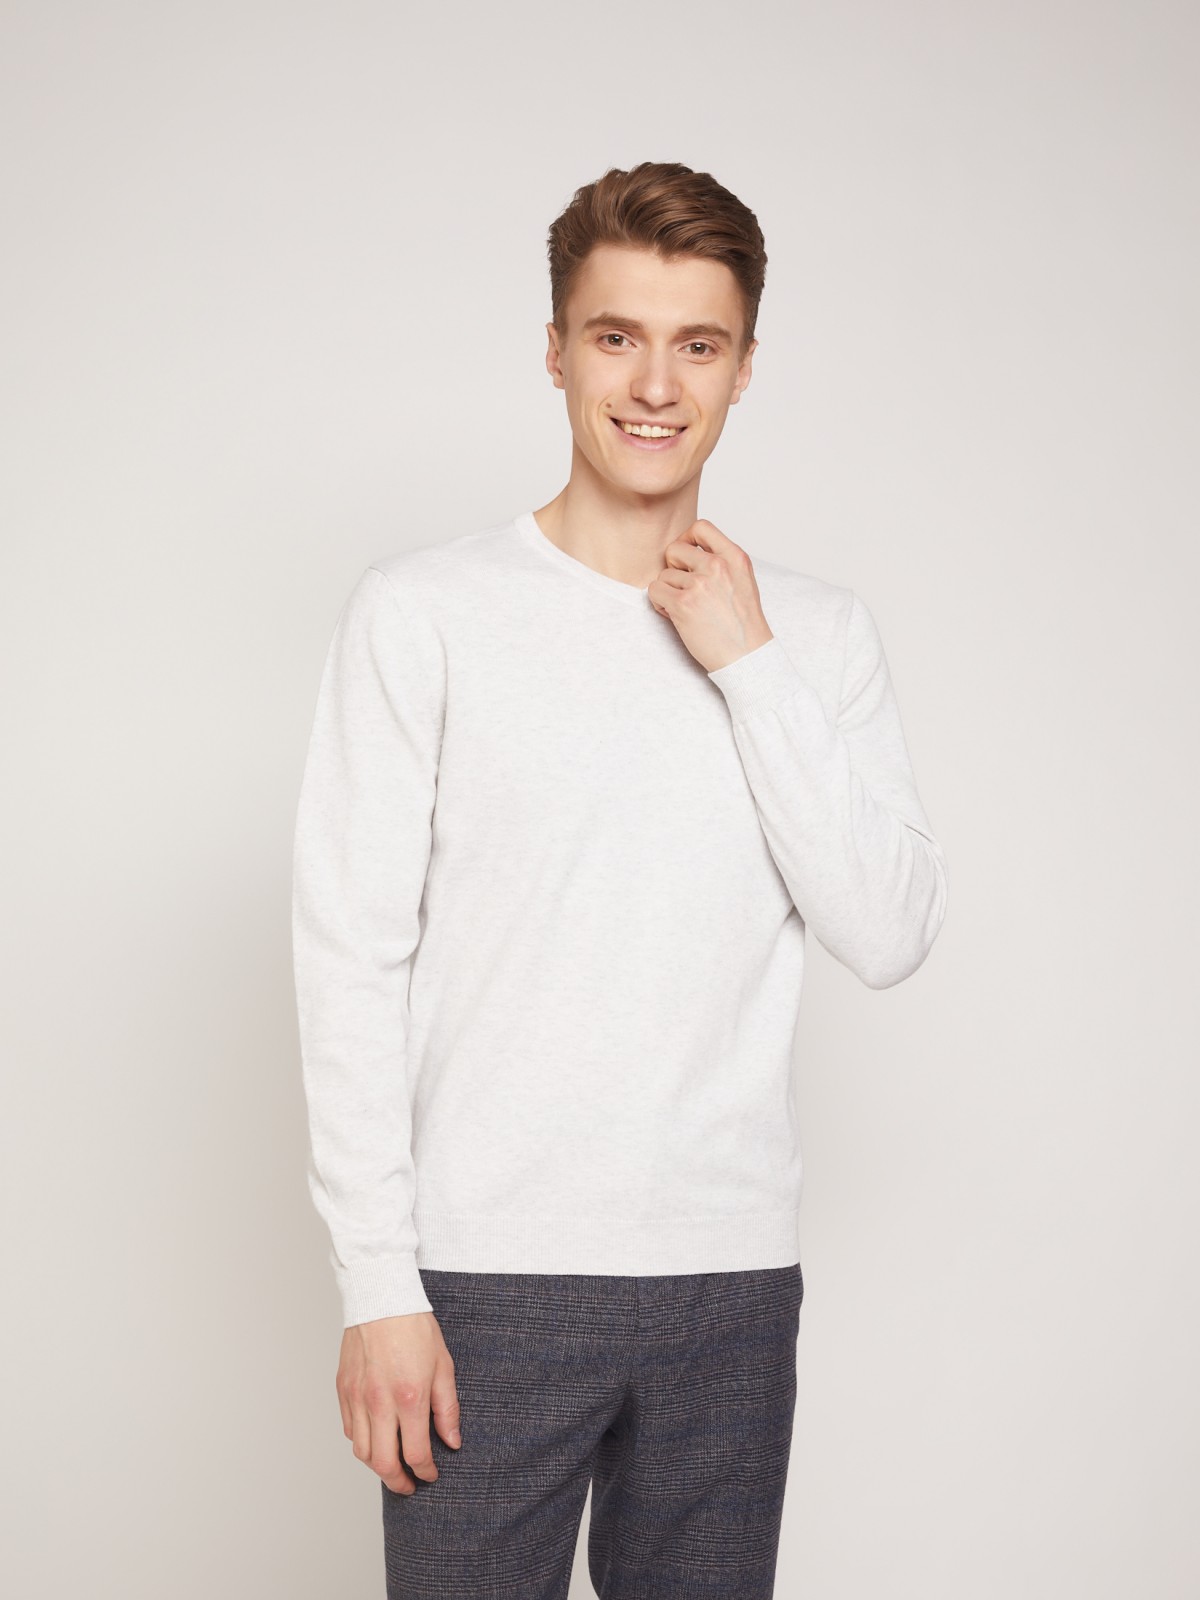 Пуловер из хлопка zolla 011336123032, цвет светло-серый, размер S - фото 2